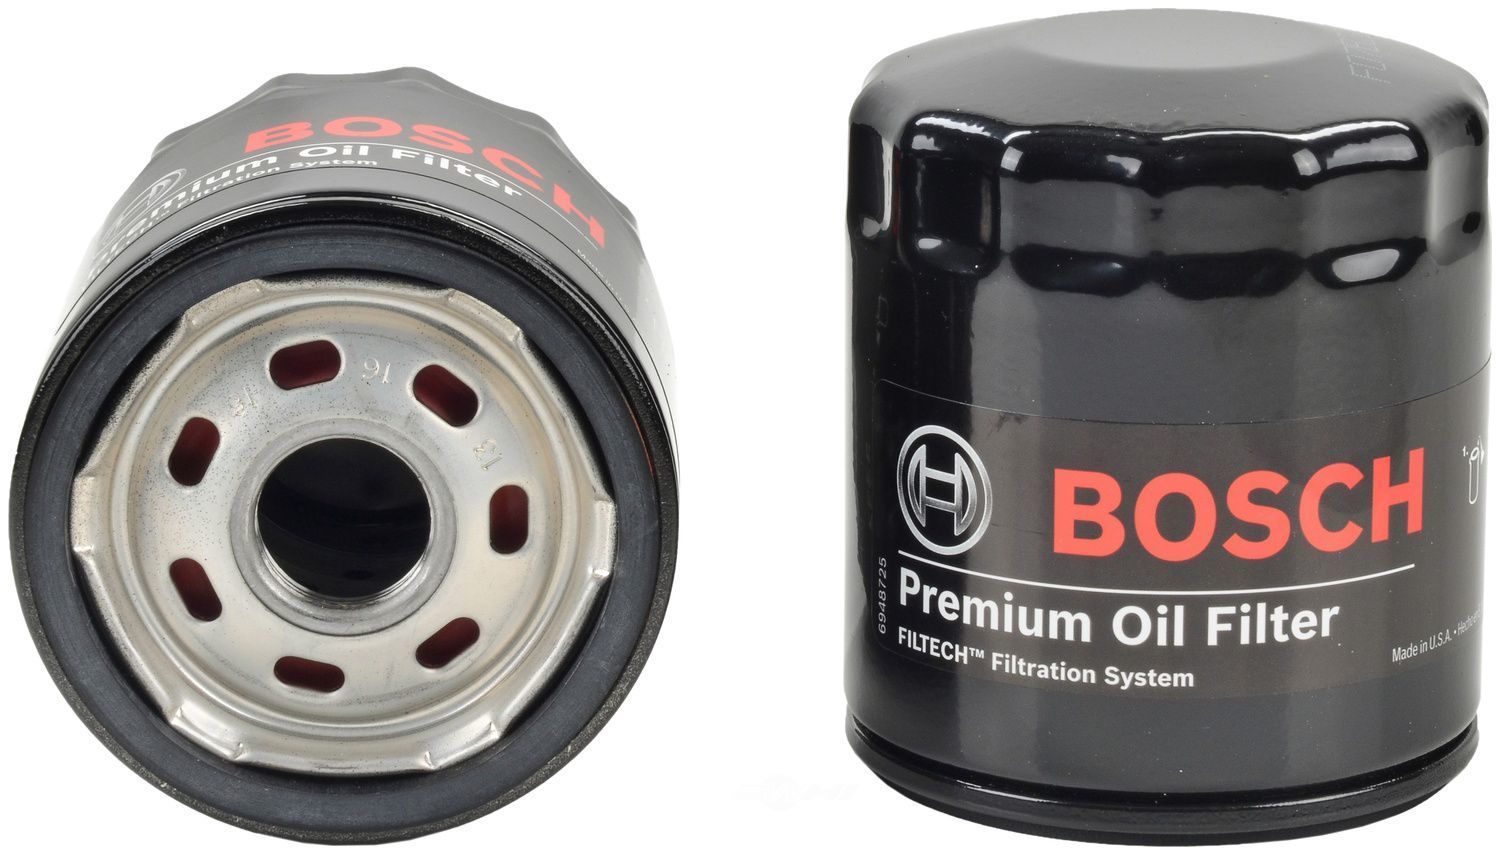 BOSCH - Premium Oil Filter - BOS 3332